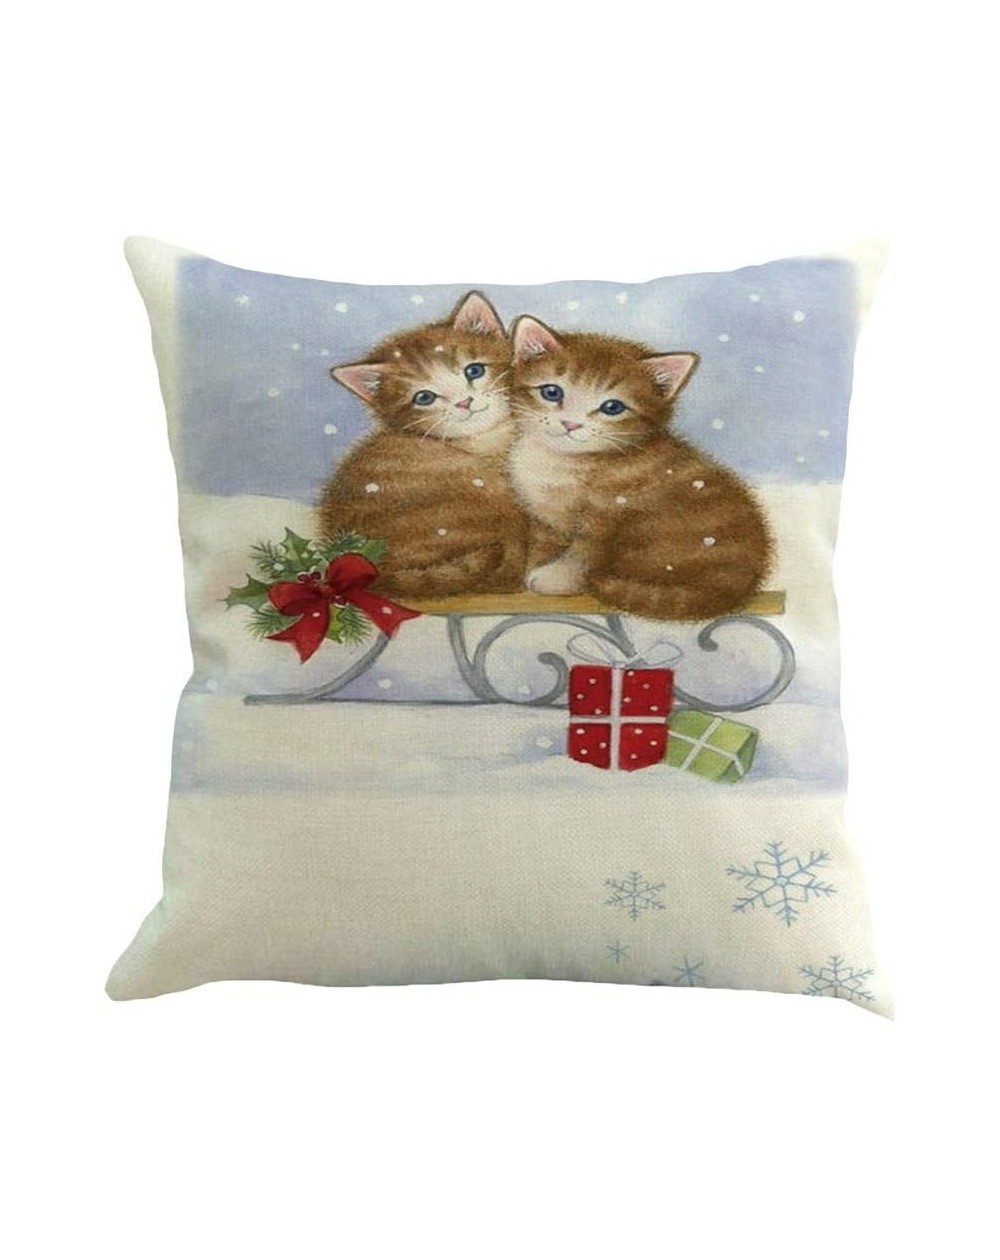 Swags Christmas Decor Christmas Pillow Cover Pillowcases Decorative Sofa Cushion Cover 45x45cm- Christmas Ornaments Advent Ca...